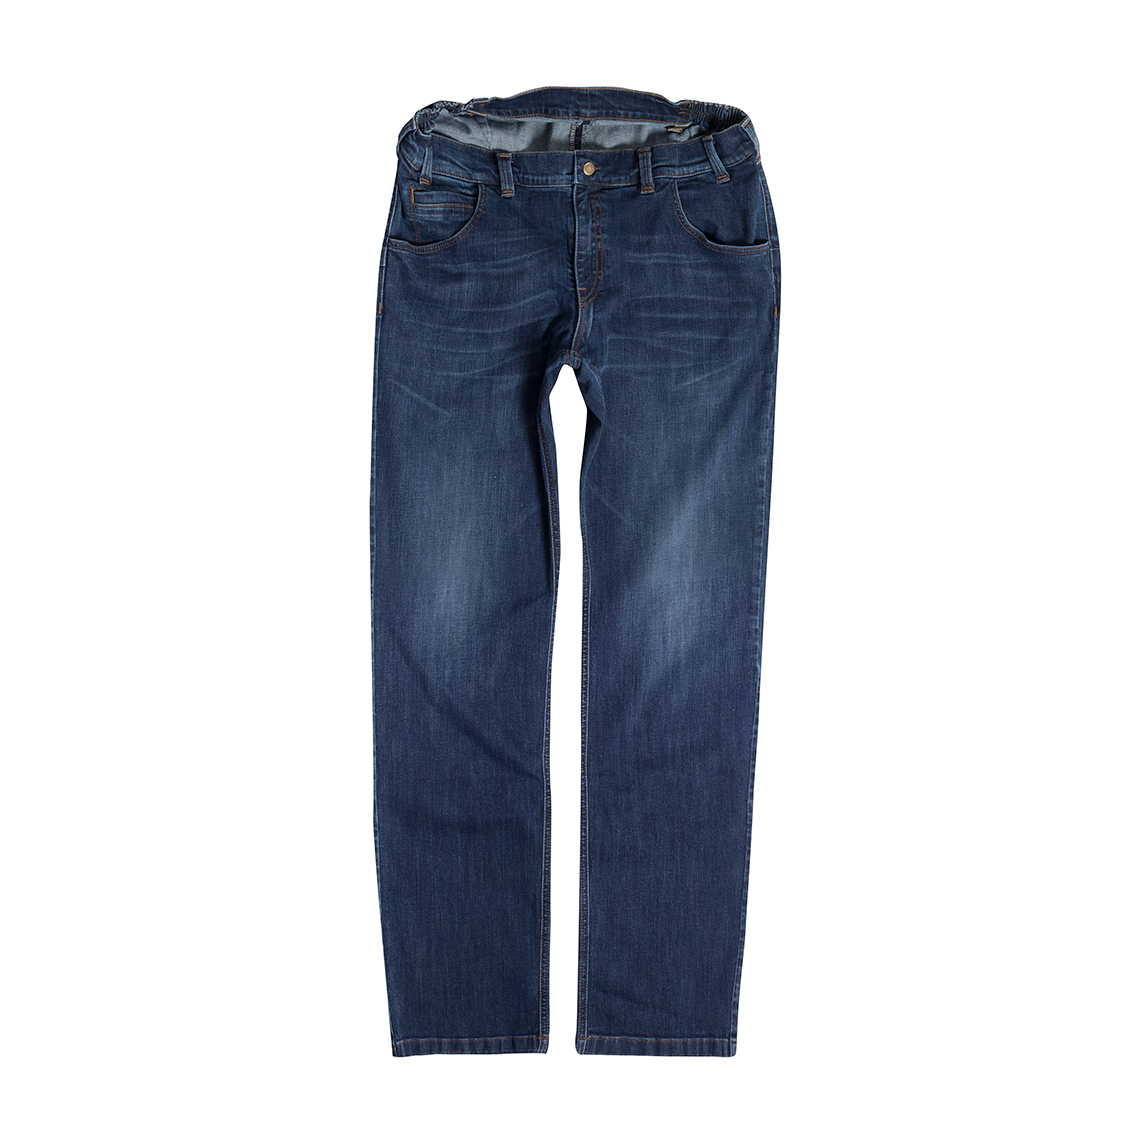 Herren Jeans  Fashion washed, blau MIKE 10391 60